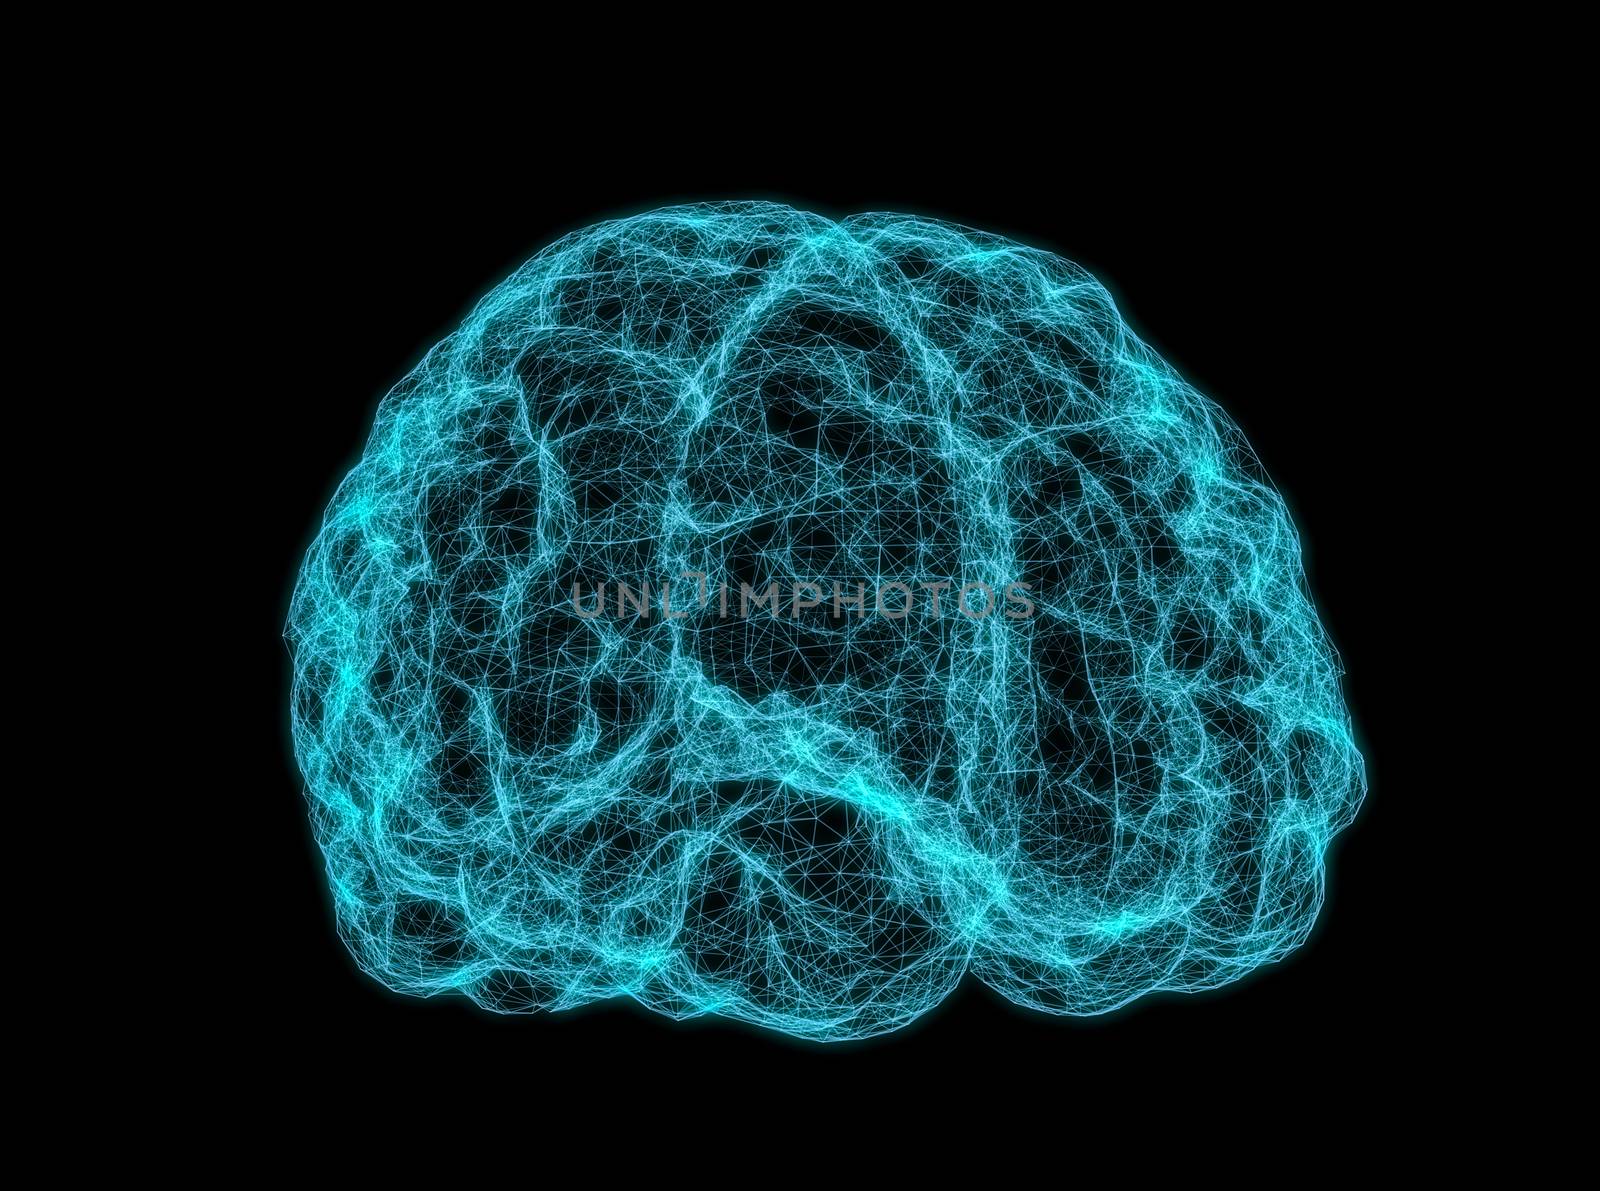 X-ray image of human brain by cherezoff